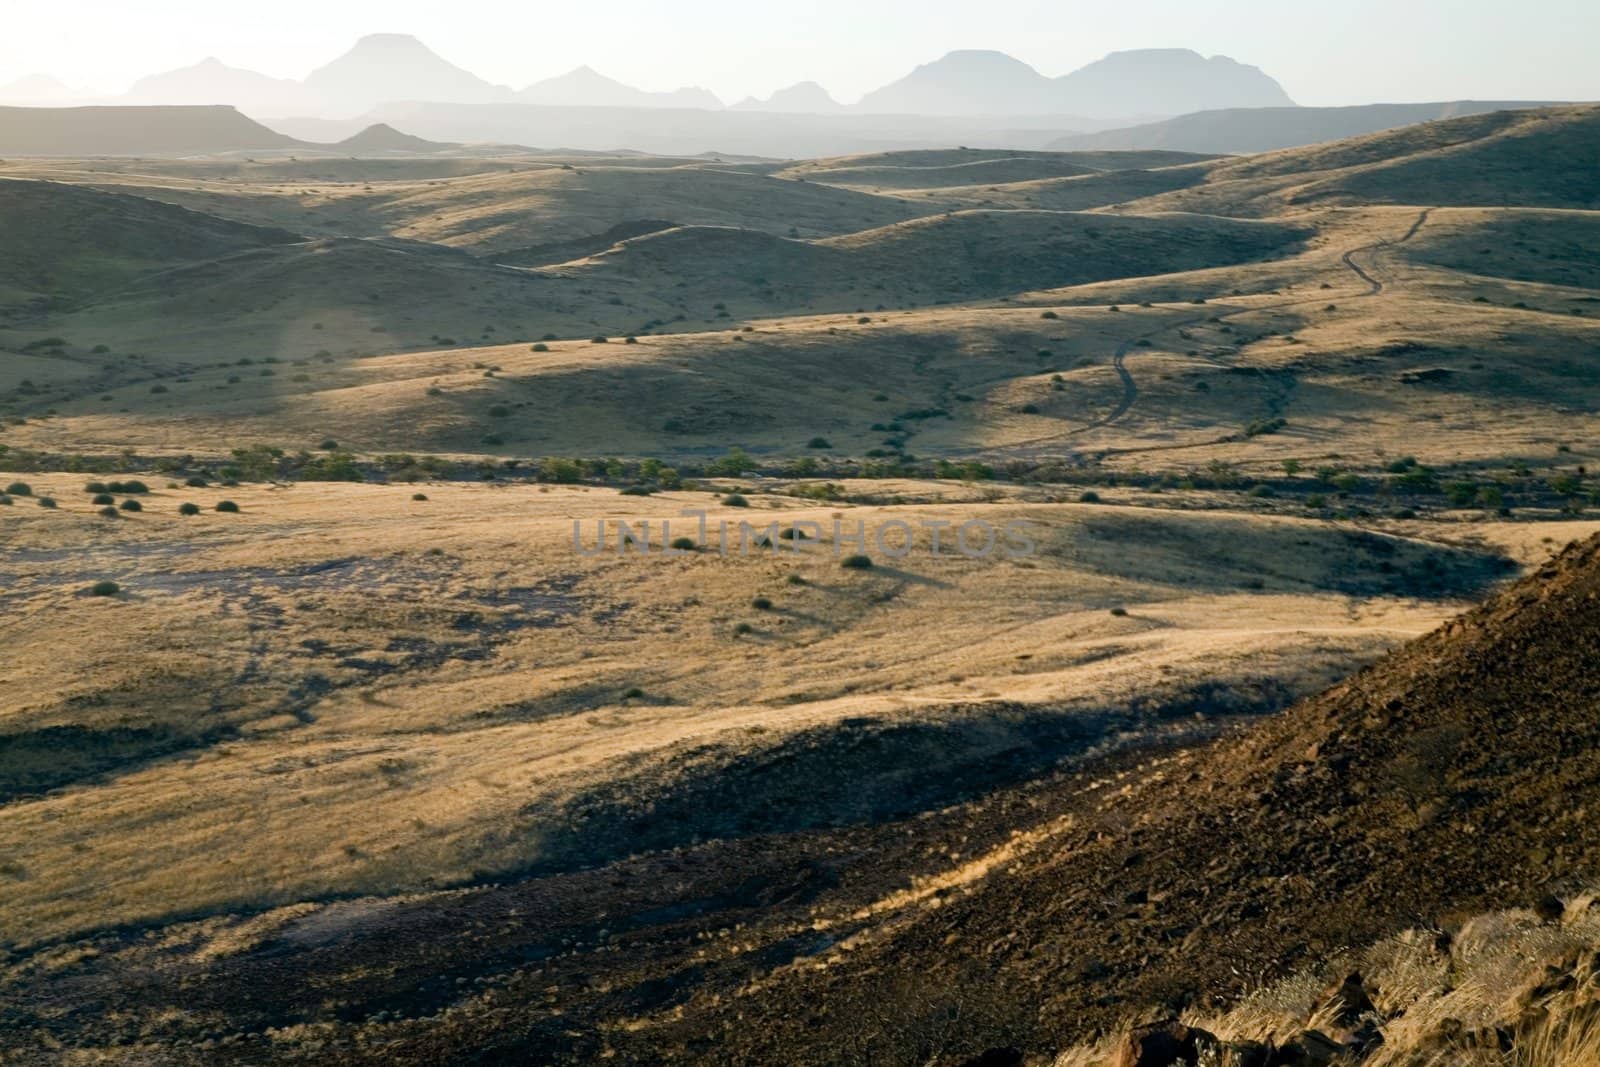 Landscape in Namibia - Brandberg Mountains